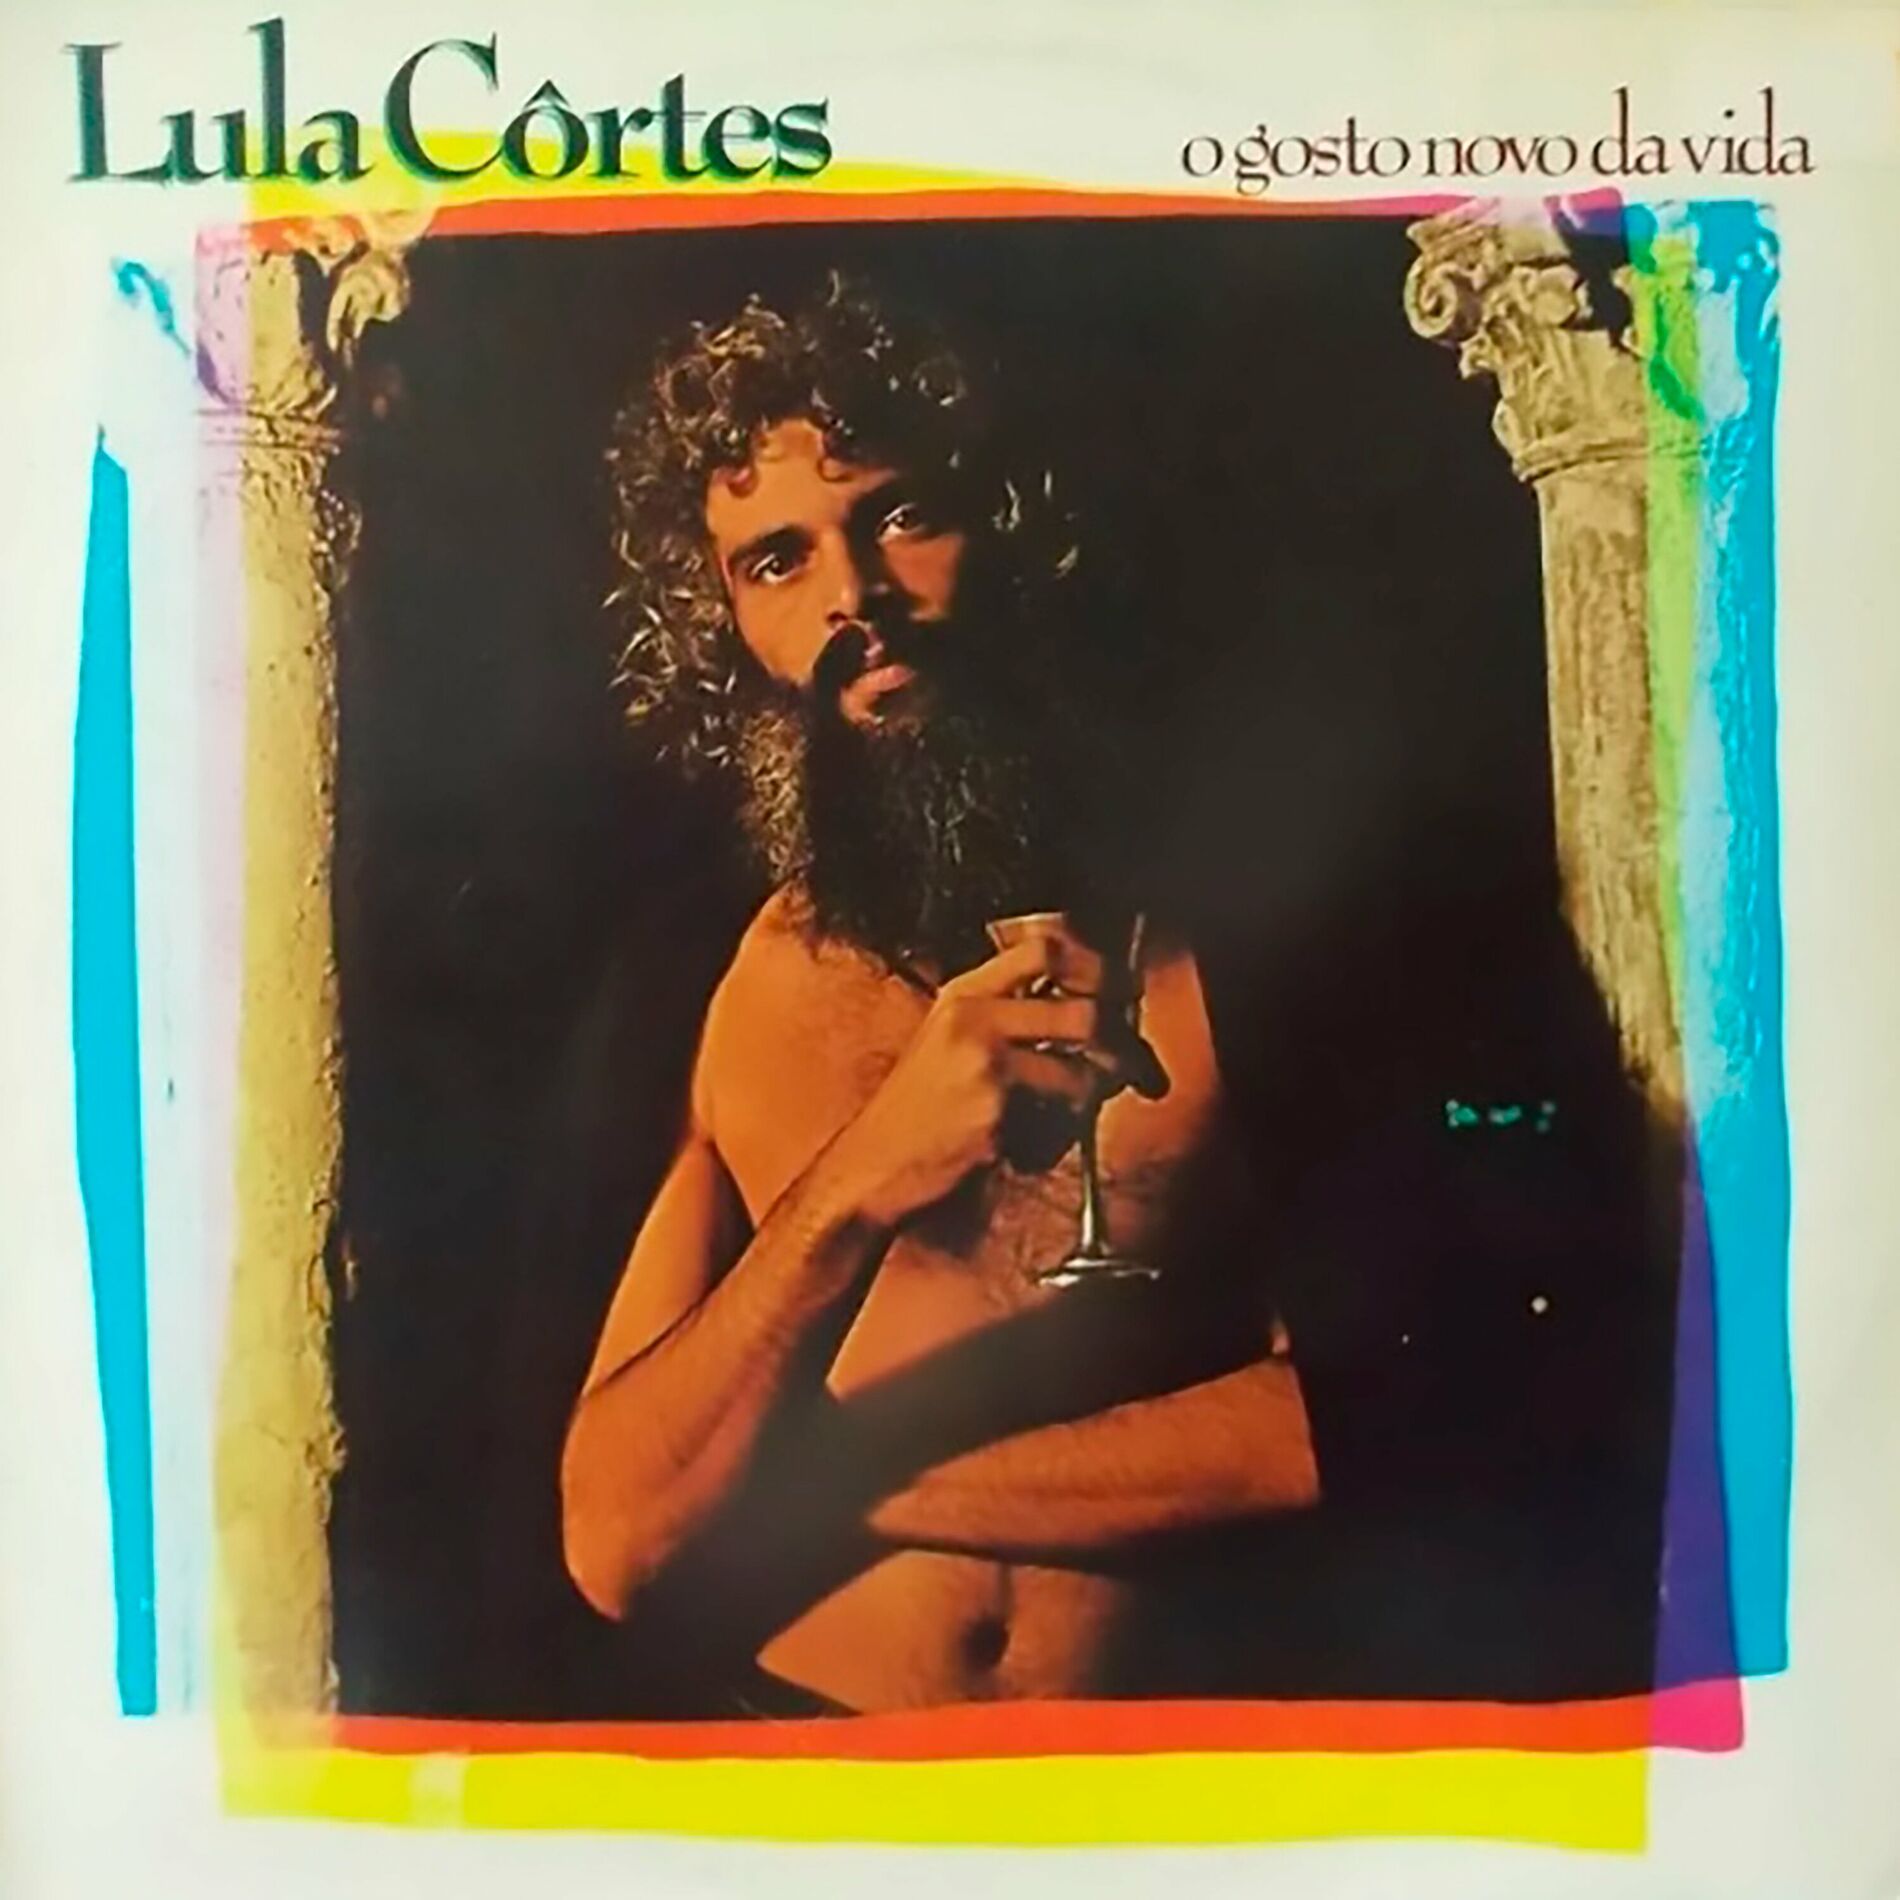 Lula Cortes: albums, songs, playlists | Listen on Deezer